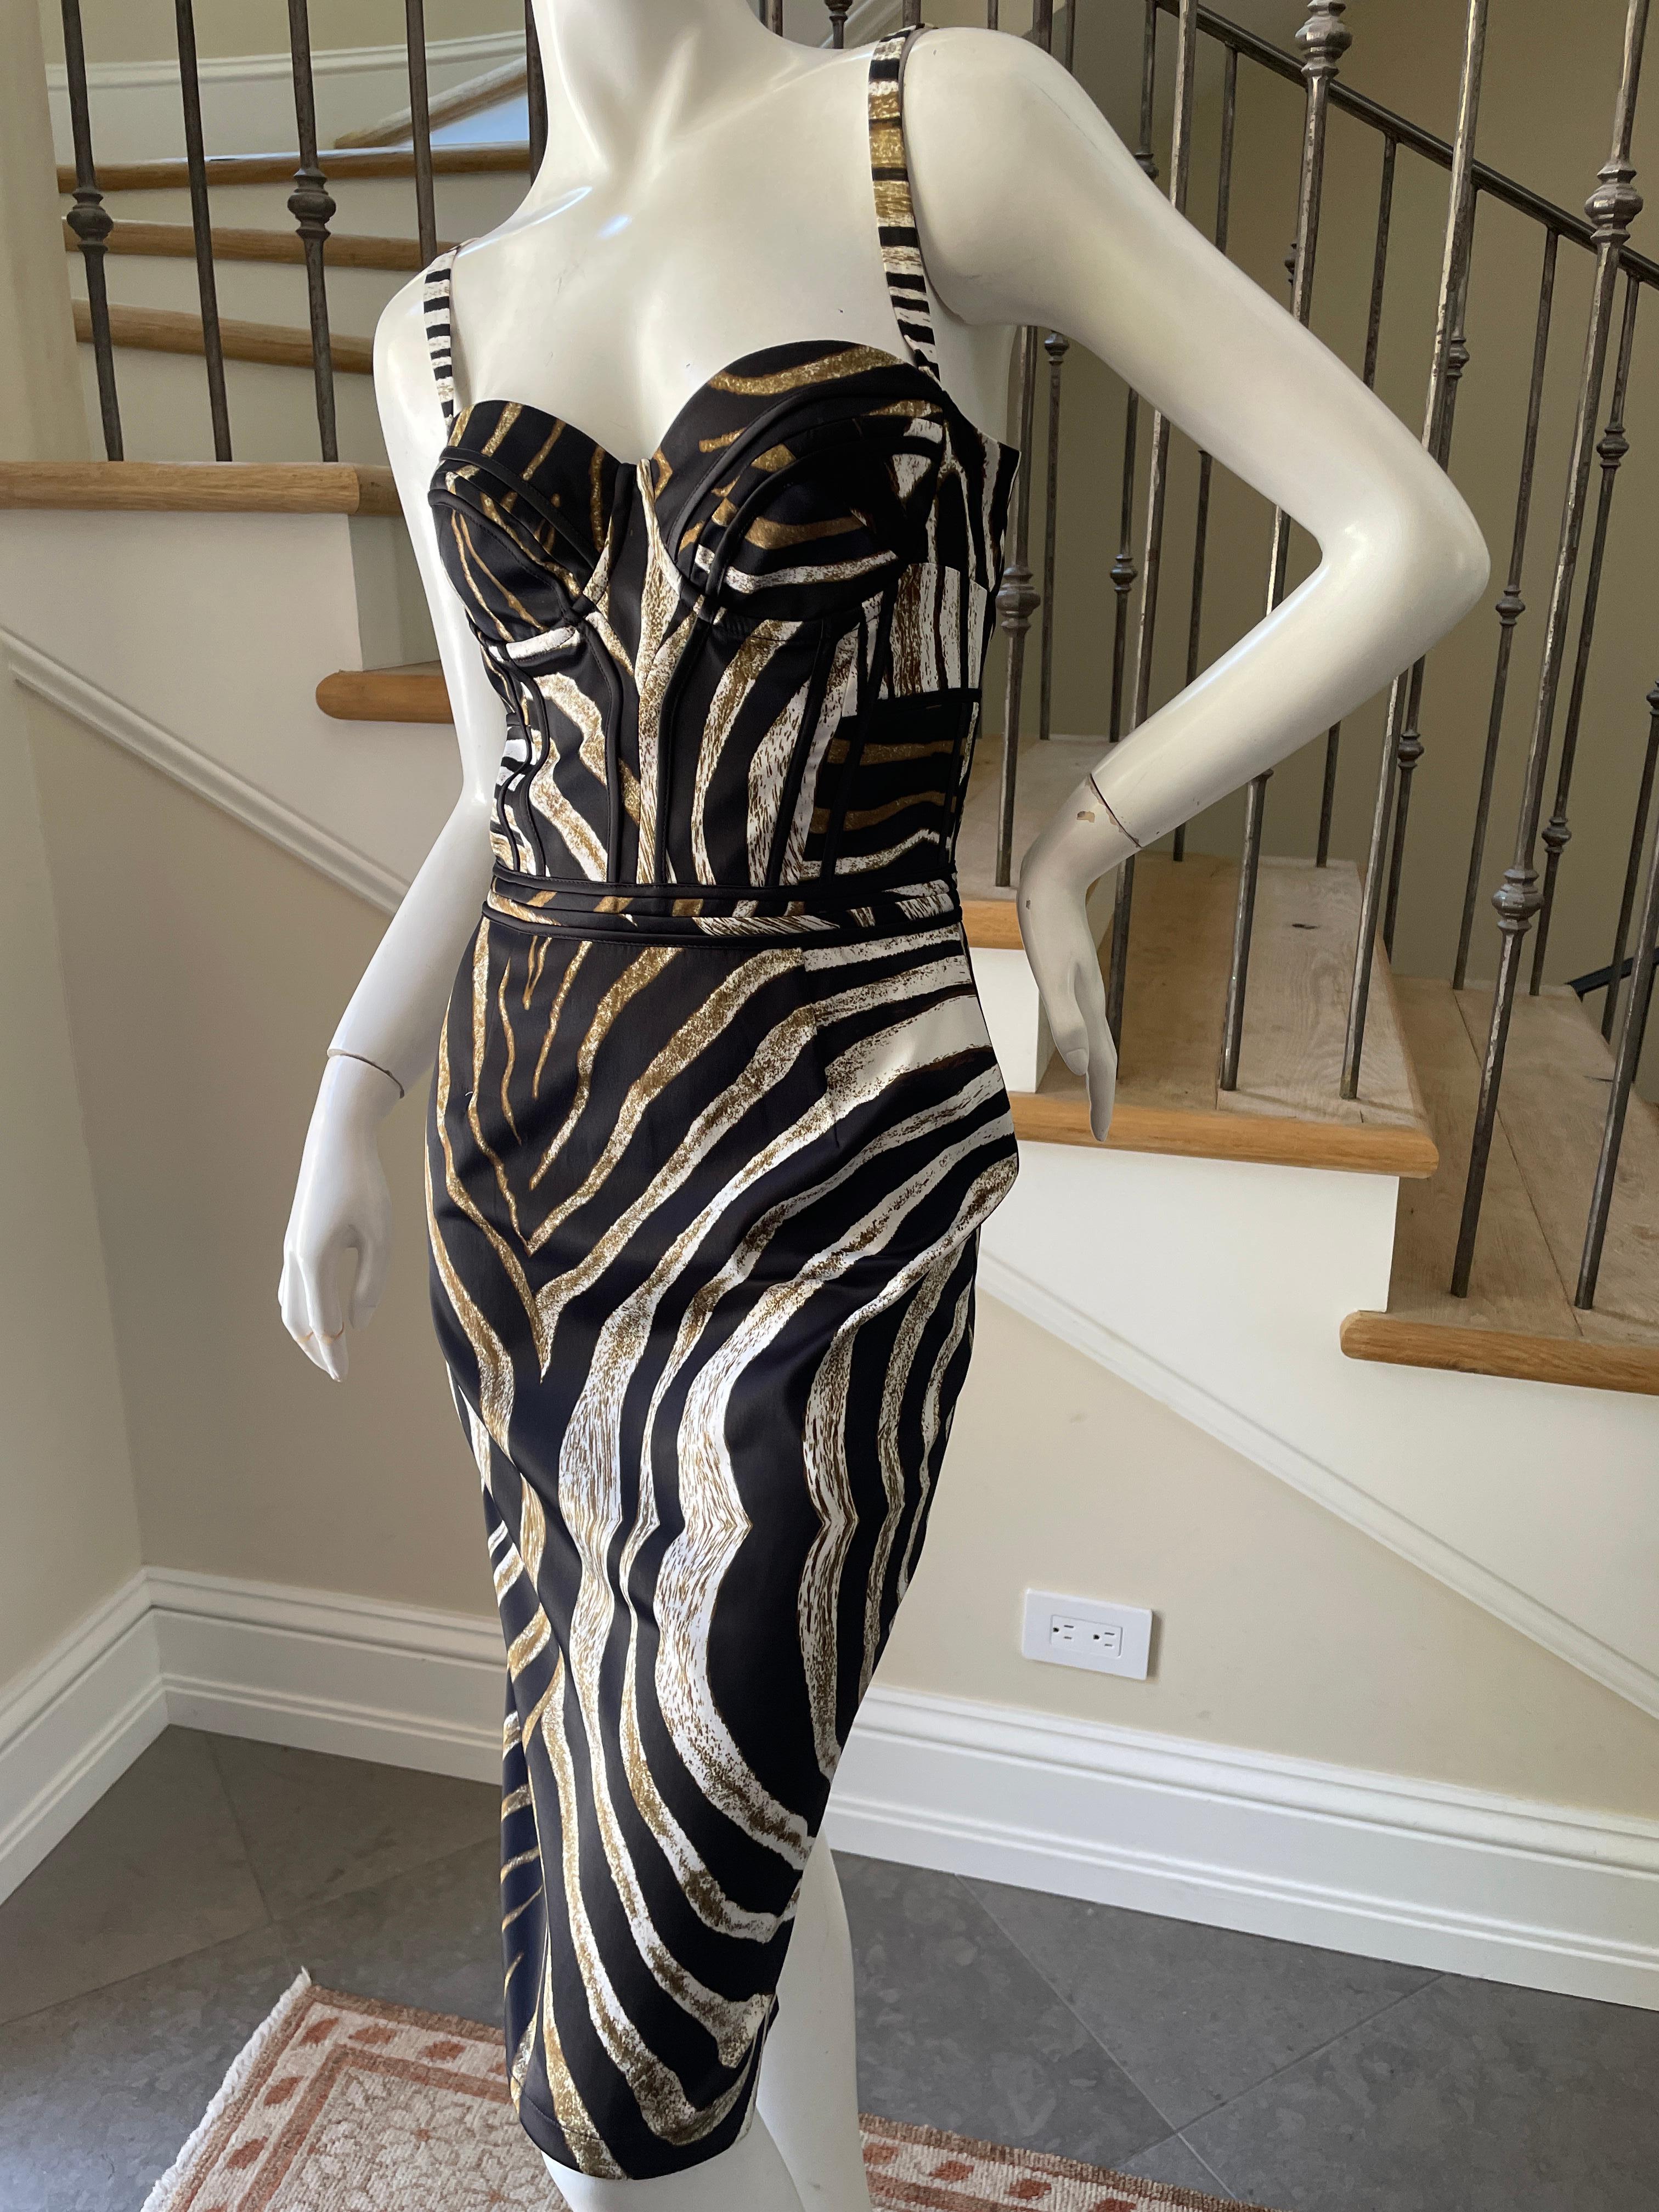 Black Just Cavalli Zebra Print Corset Cocktail Dress by Roberto Cavalli For Sale